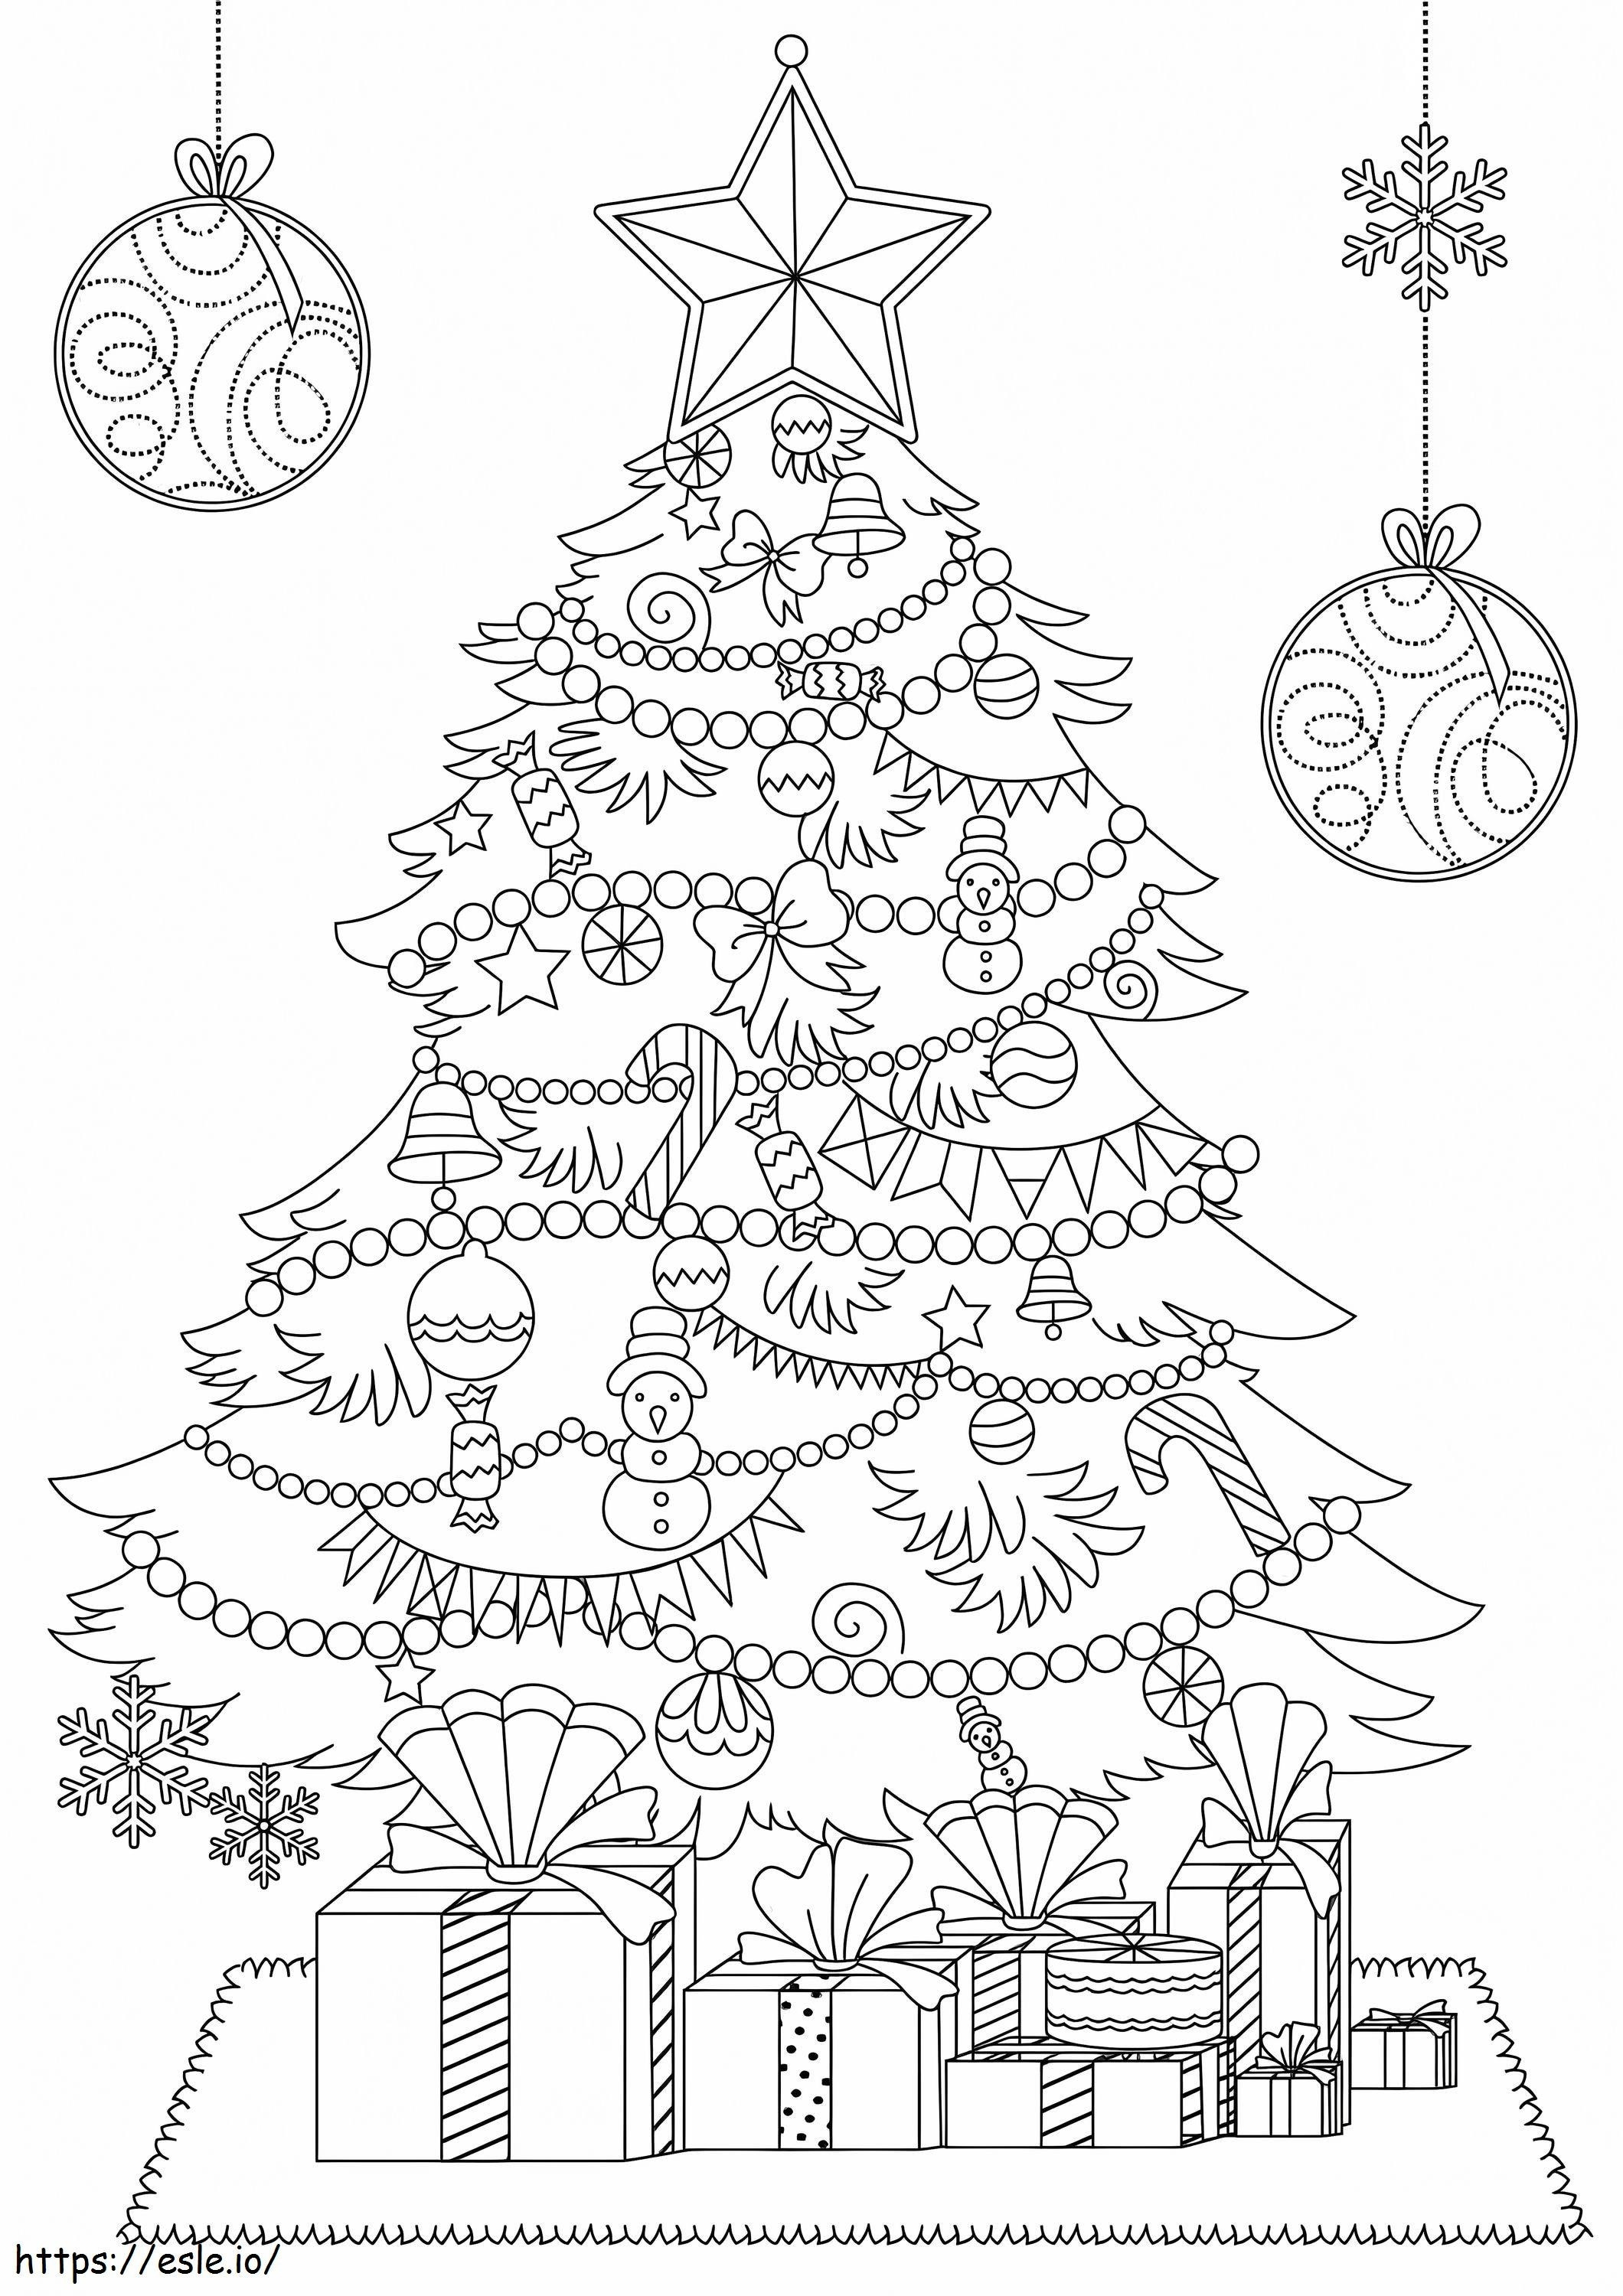 Good Christmas Tree coloring page